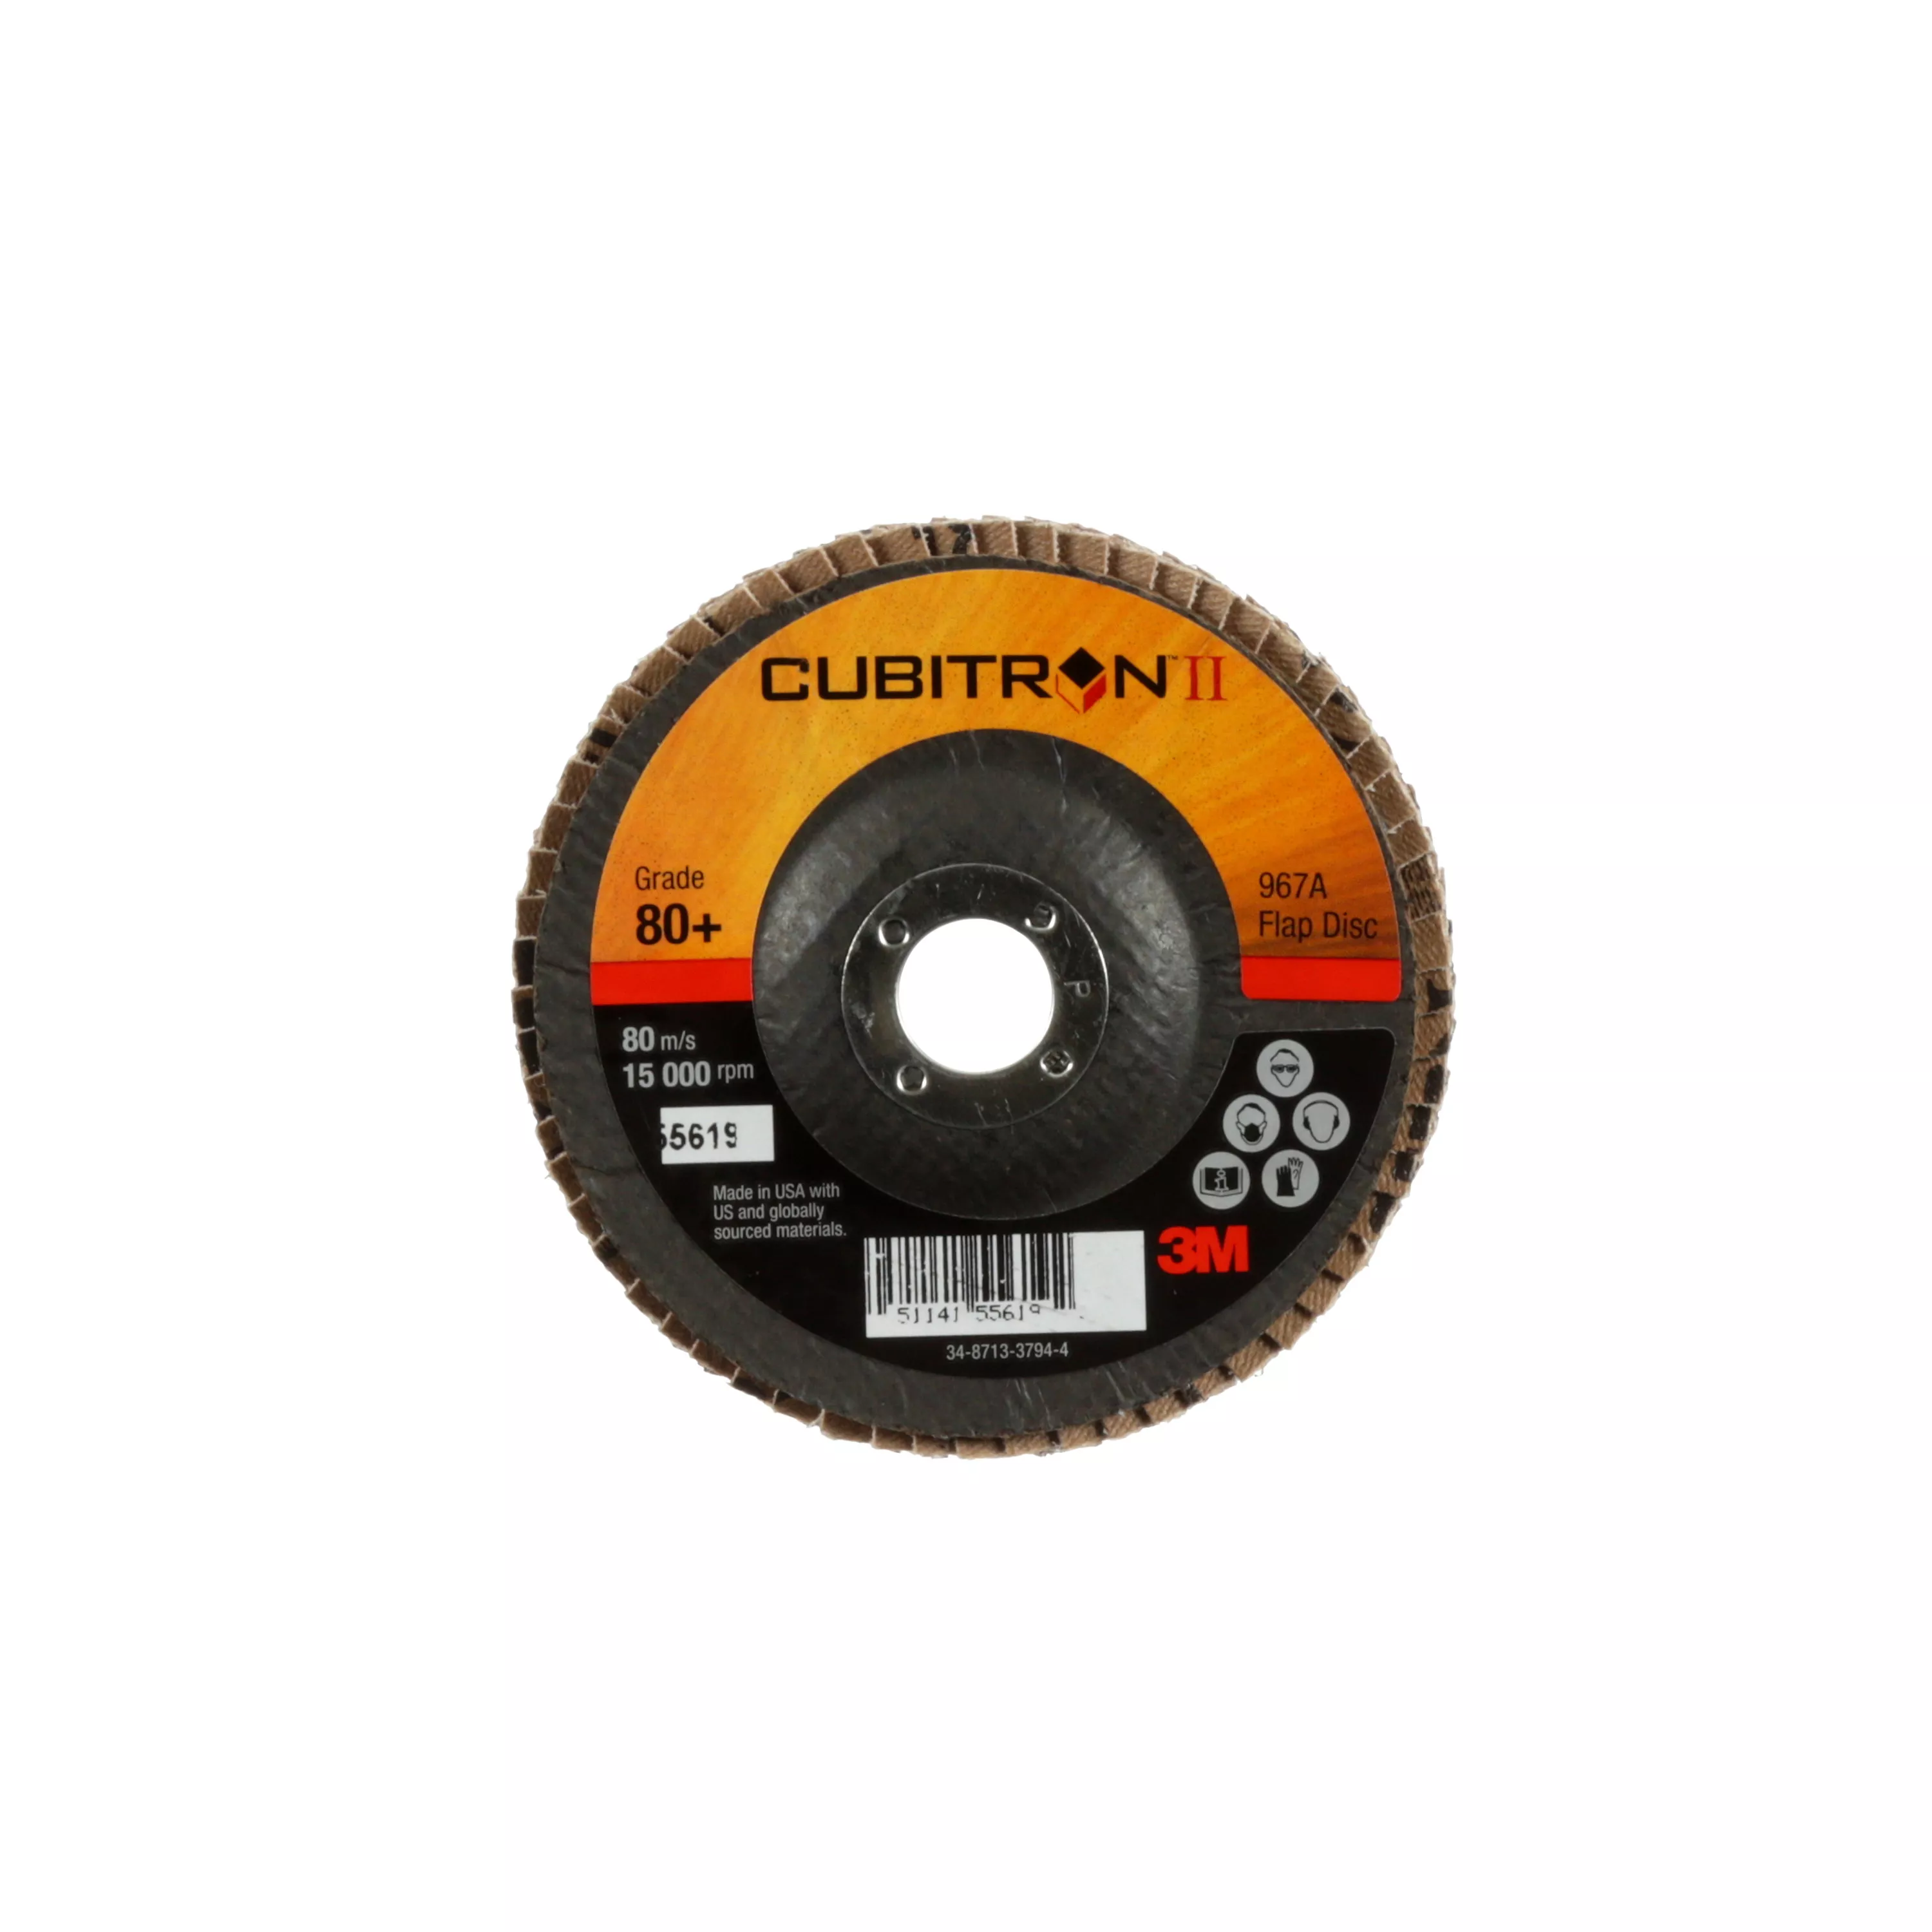 SKU 7100097627 | 3M™ Cubitron™ II Flap Disc 967A